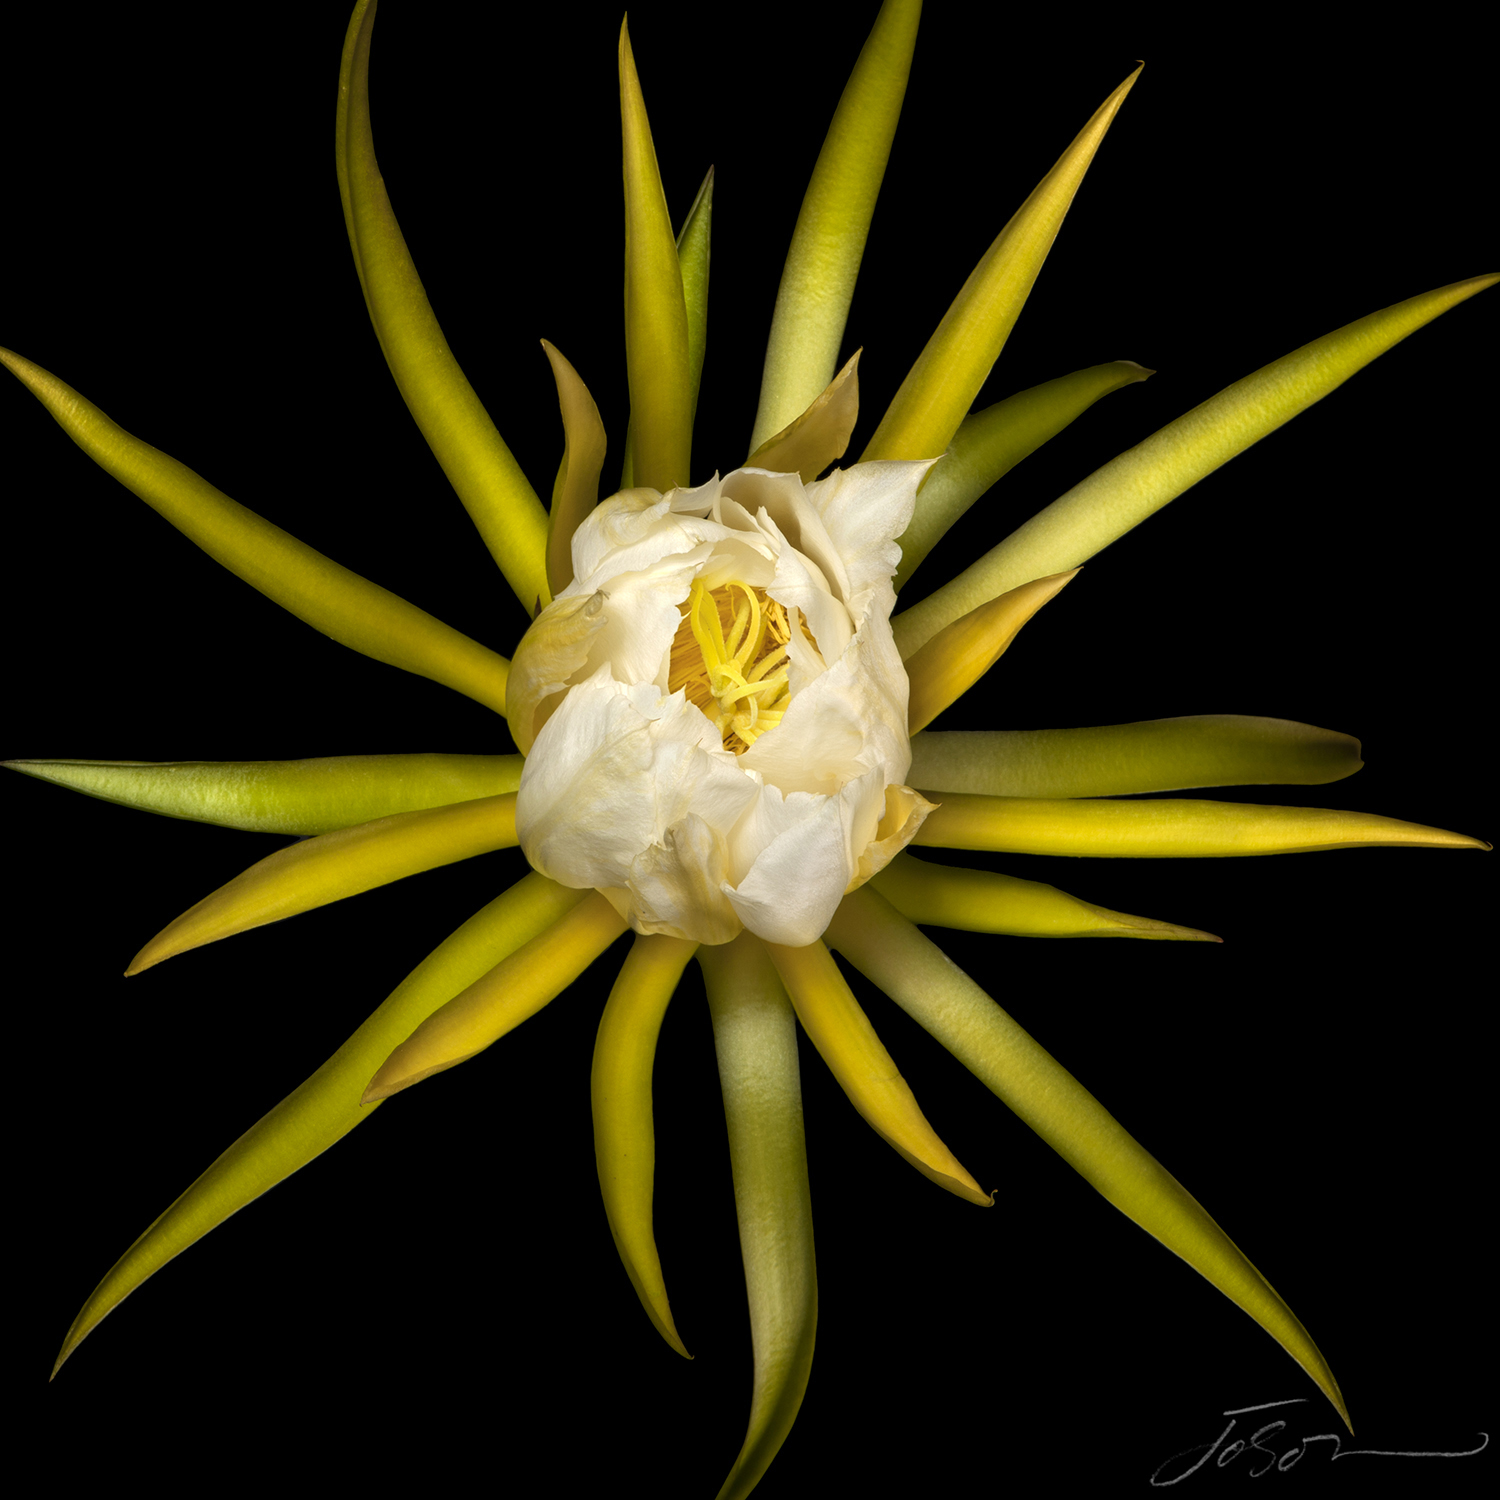 Dragon fruit flower (Hylocereus undatus).jpg